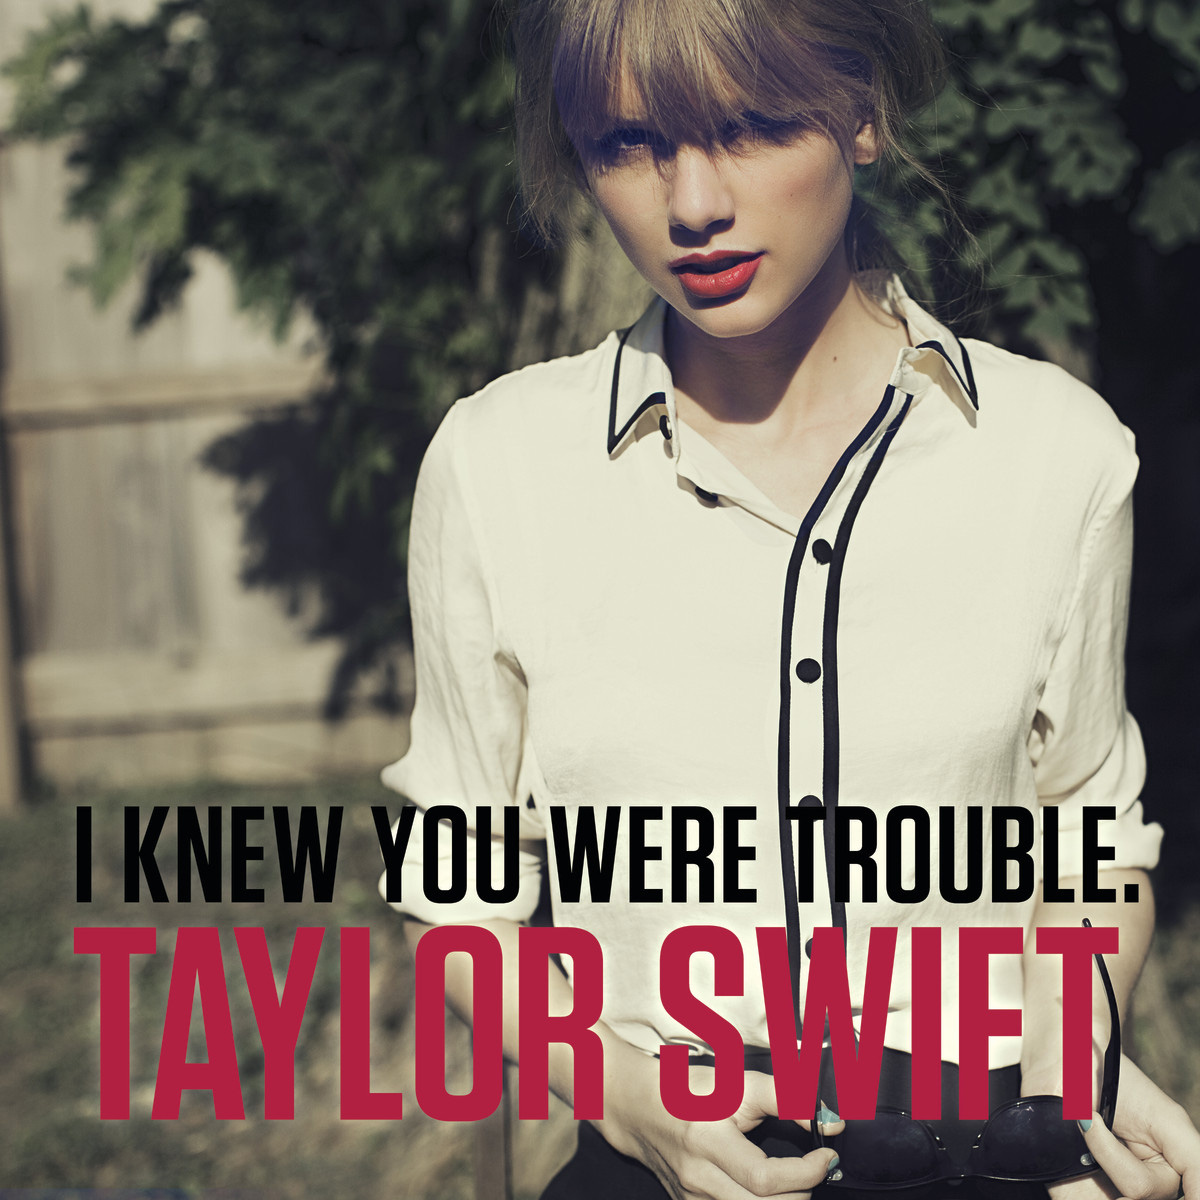 Taylor Swift - I Knew You Were Trouble под рок гитару,пианино и аранзеровку